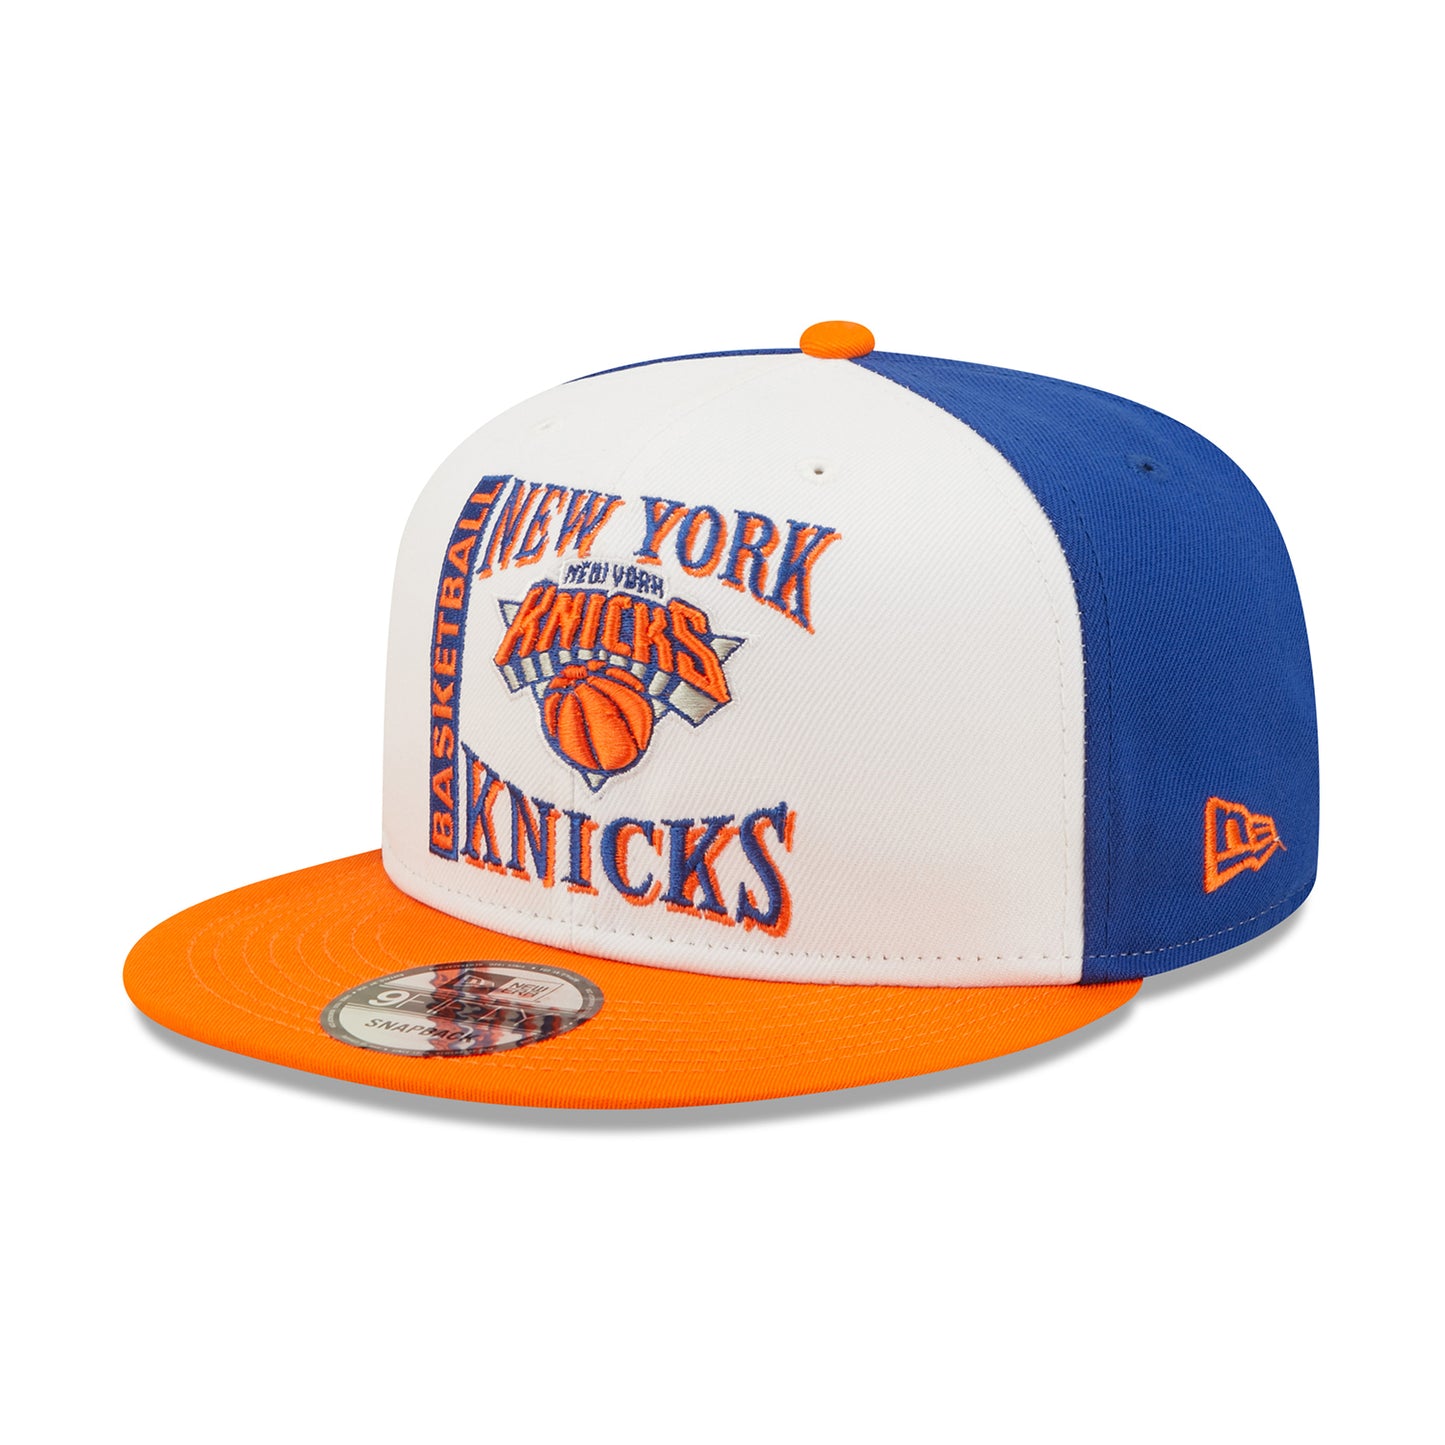 New Era Knicks Retro Sport Snapback In White, Blue & Orange - Angled Left Side View